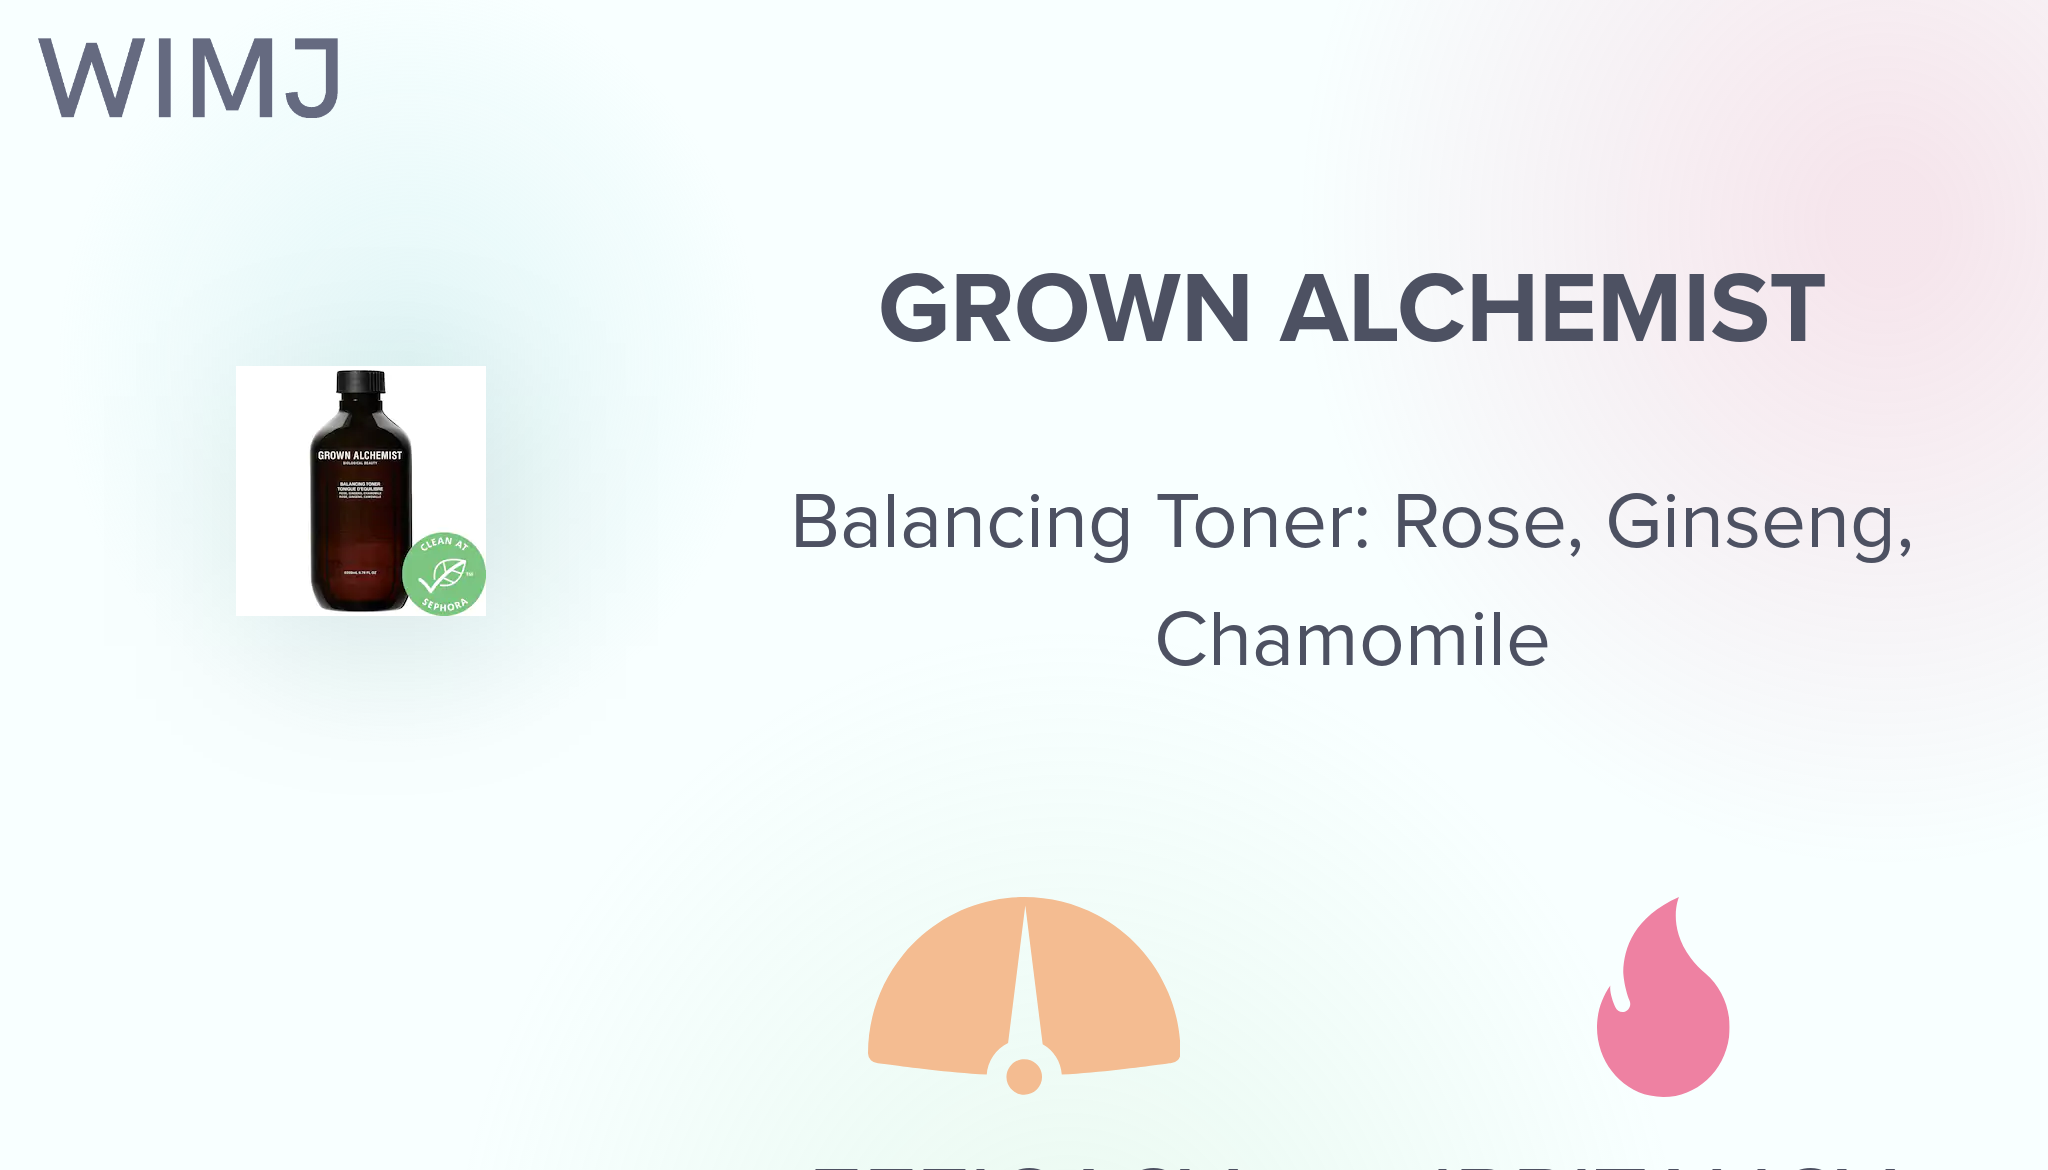 Review: Grown Ginseng, Balancing Alchemist WIMJ Chamomile - Rose, - Toner: